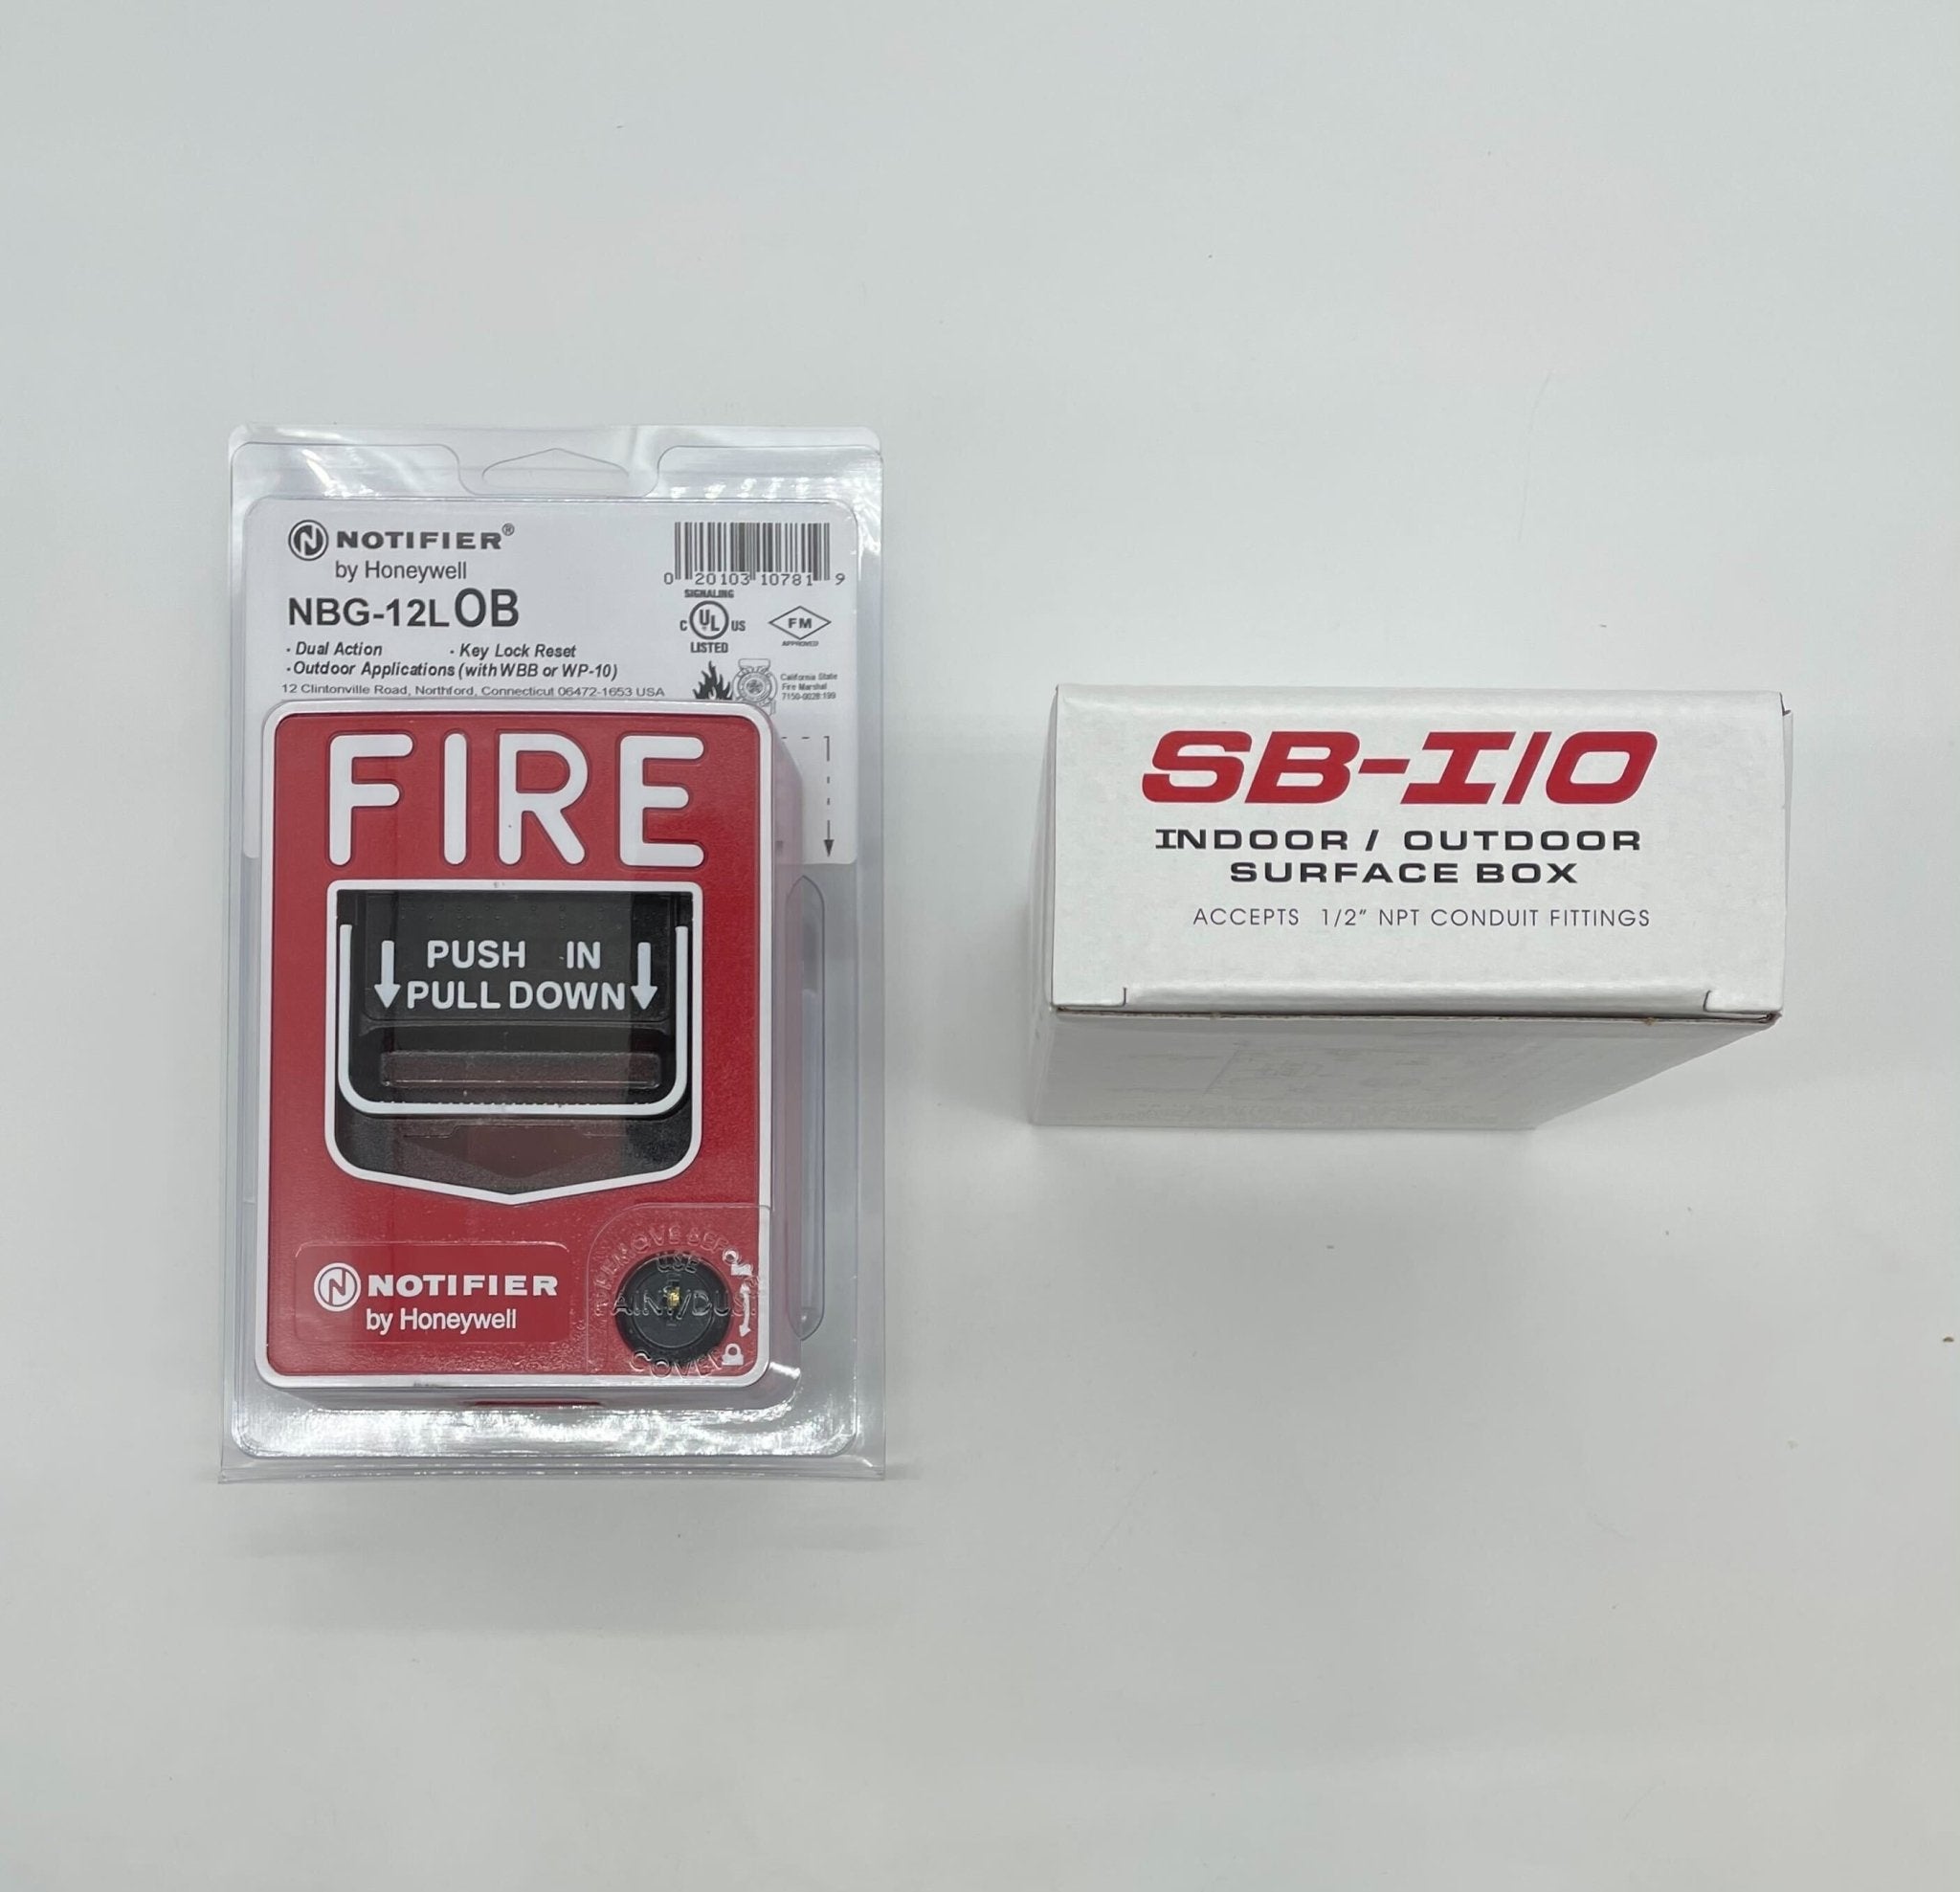 Notifier NBG-12LOB - The Fire Alarm Supplier